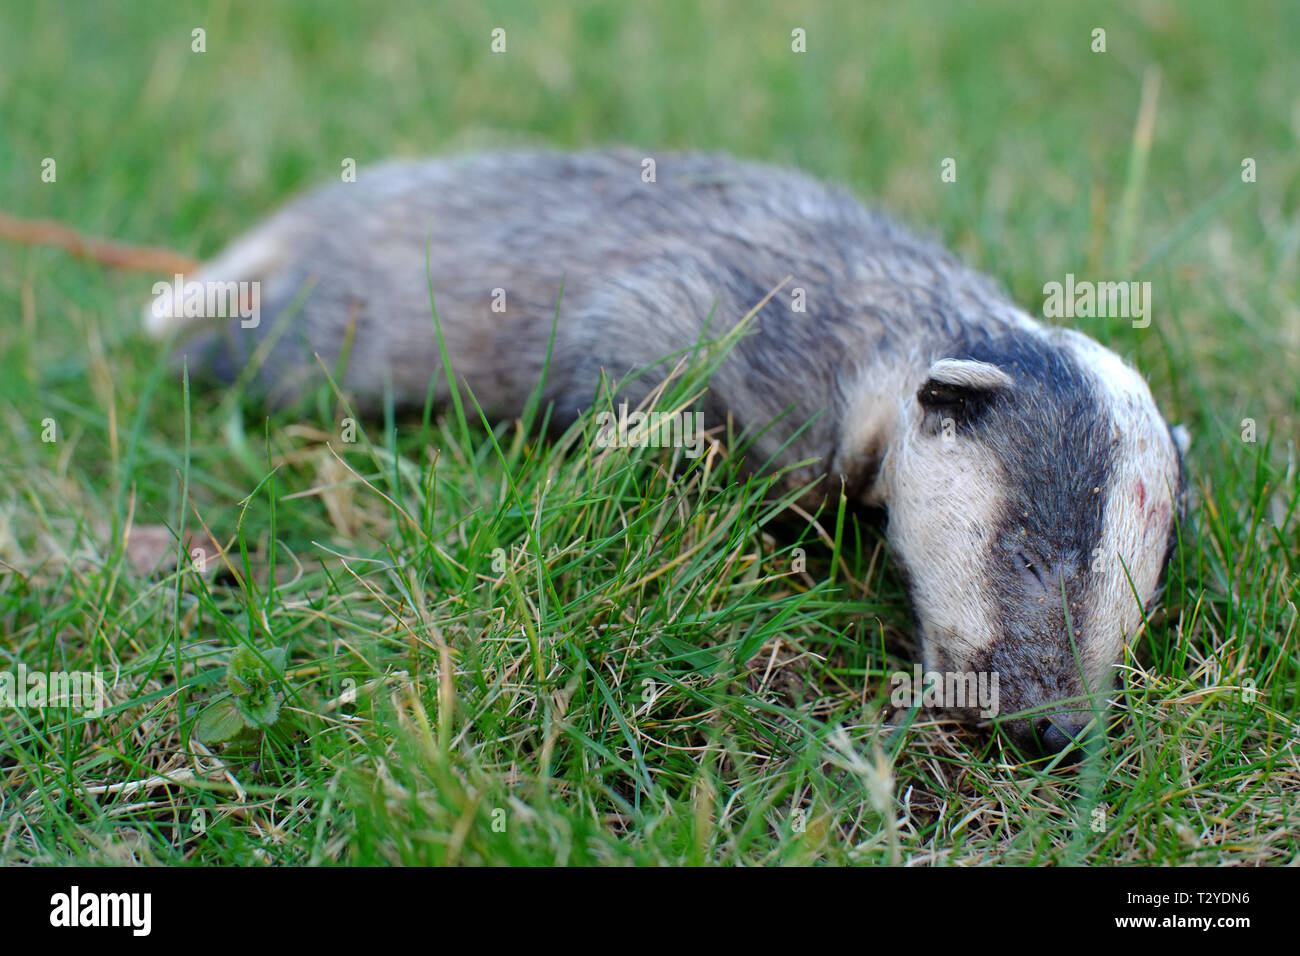 Dead badger cub. Stock Photo